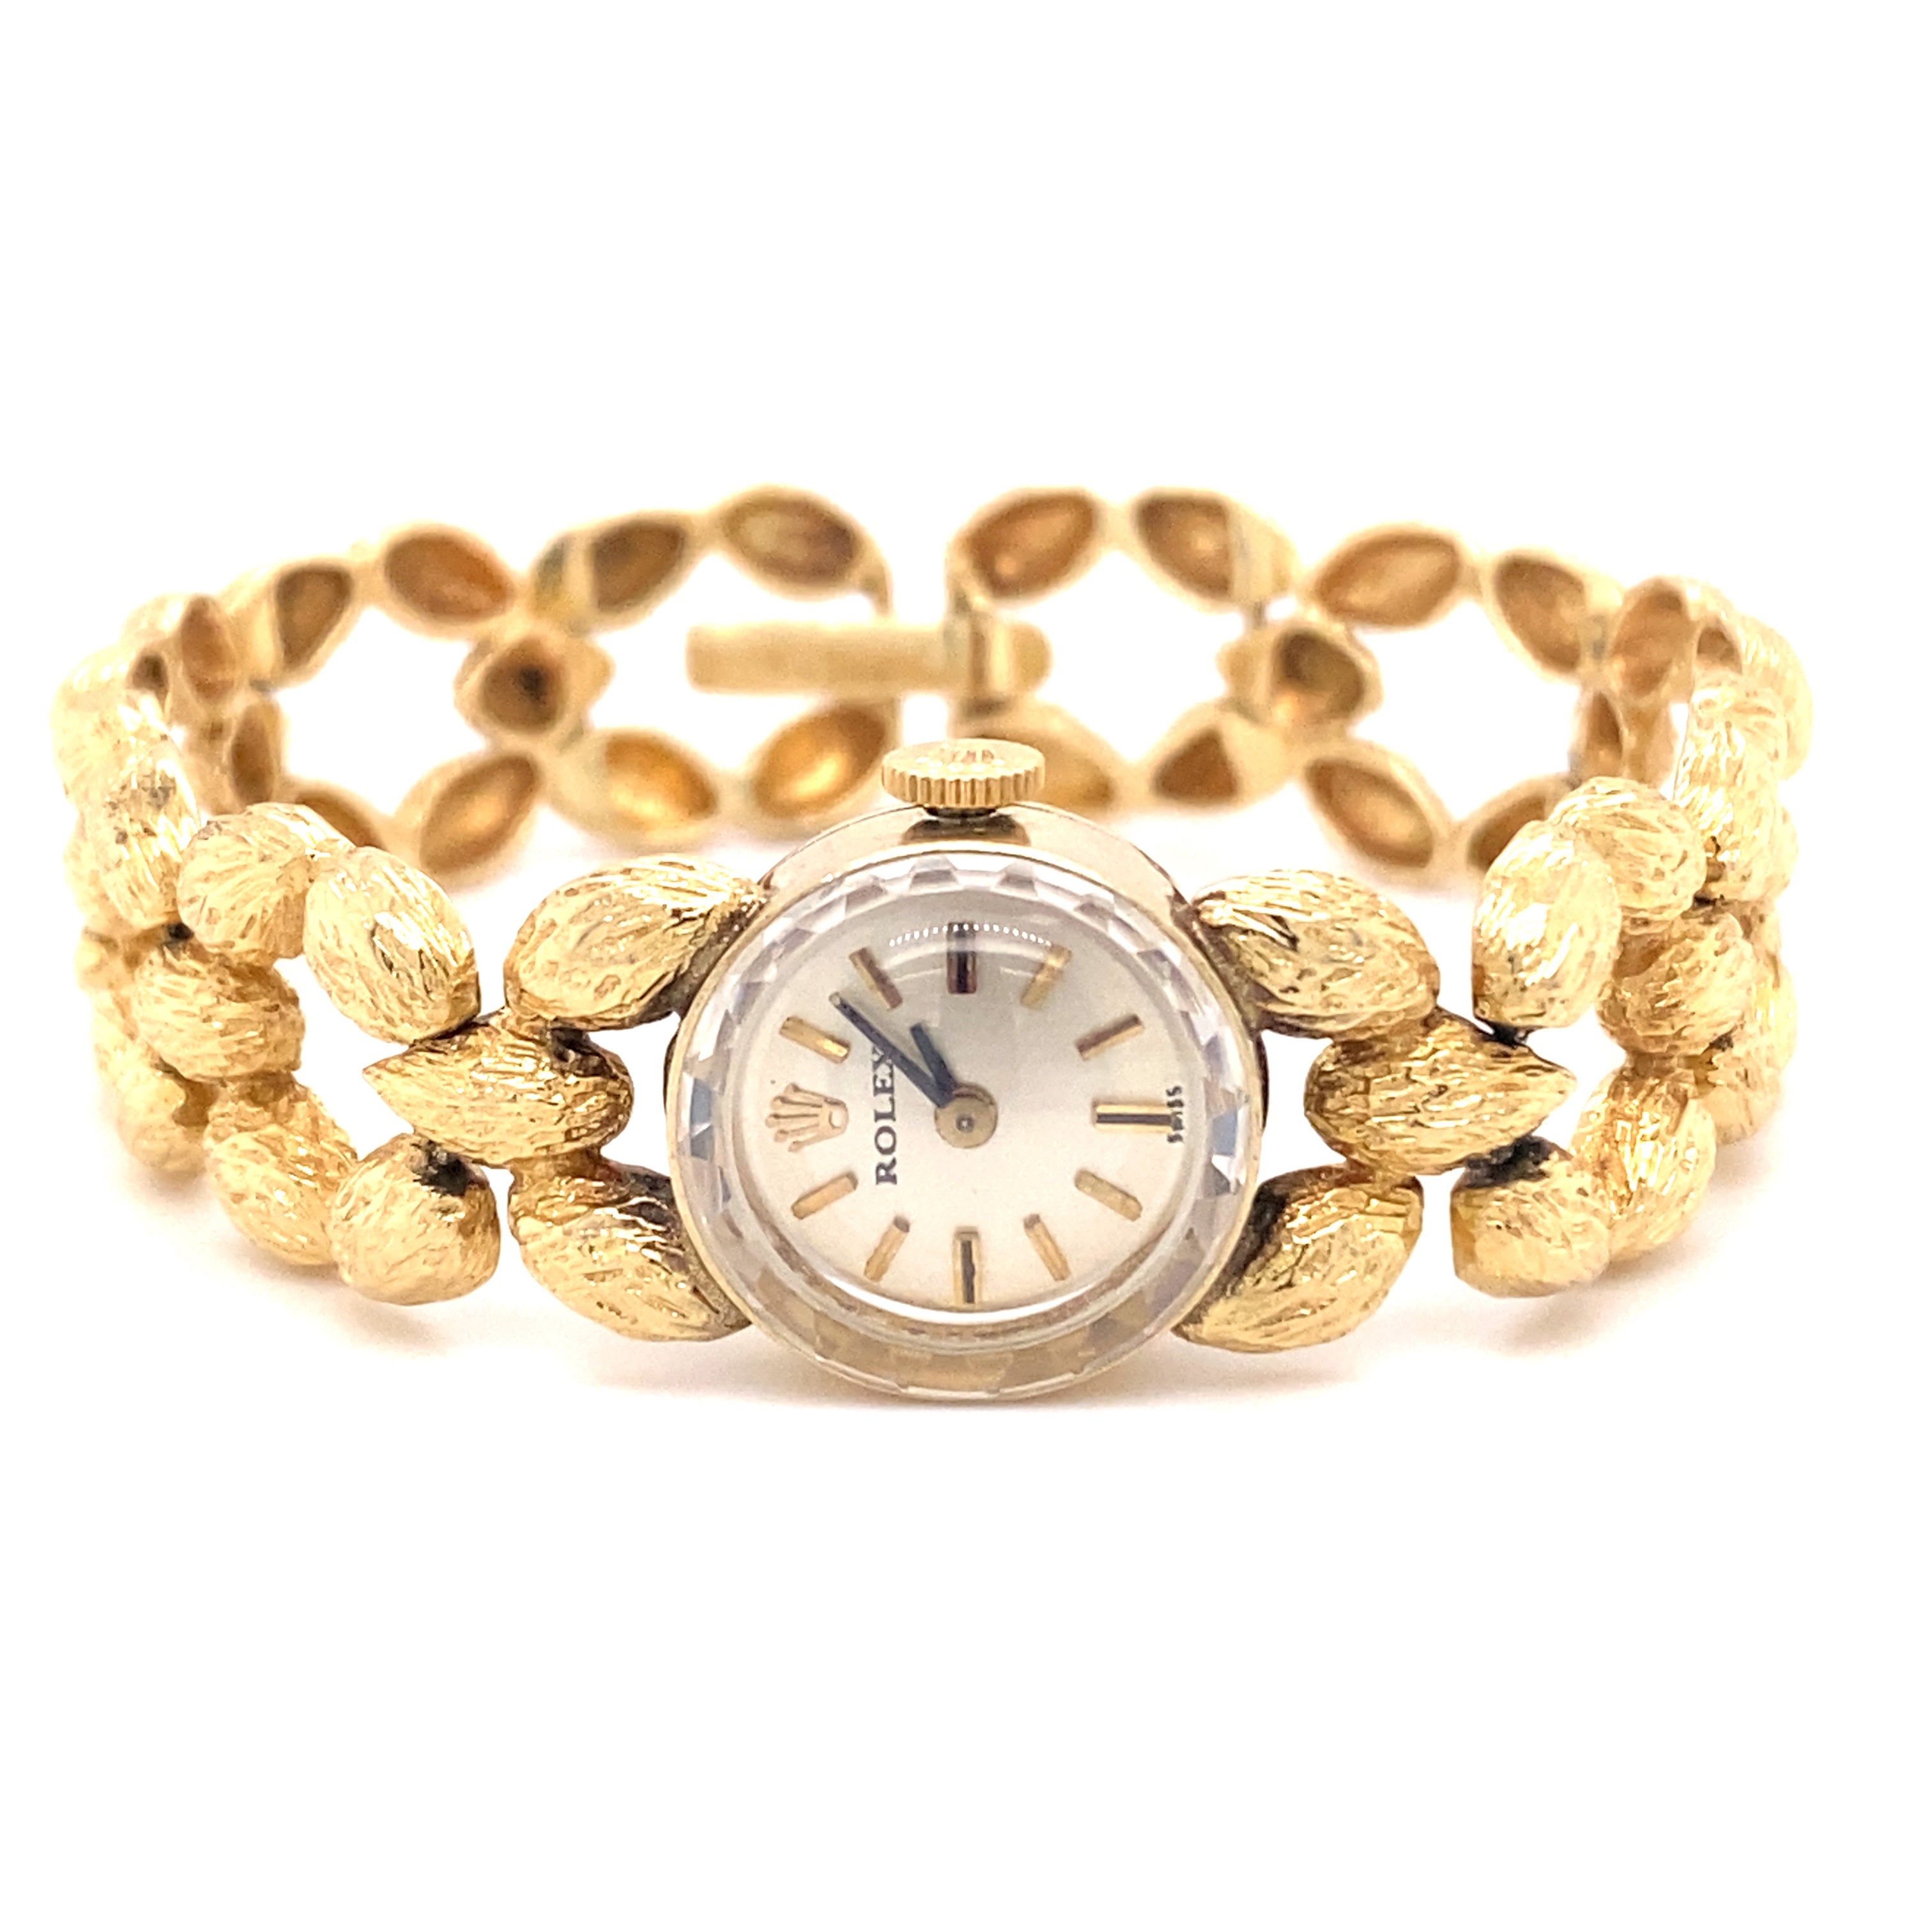 Circa 1940s Rolex Almond Bark Motif Open Wrist Watch in 1 - The Group